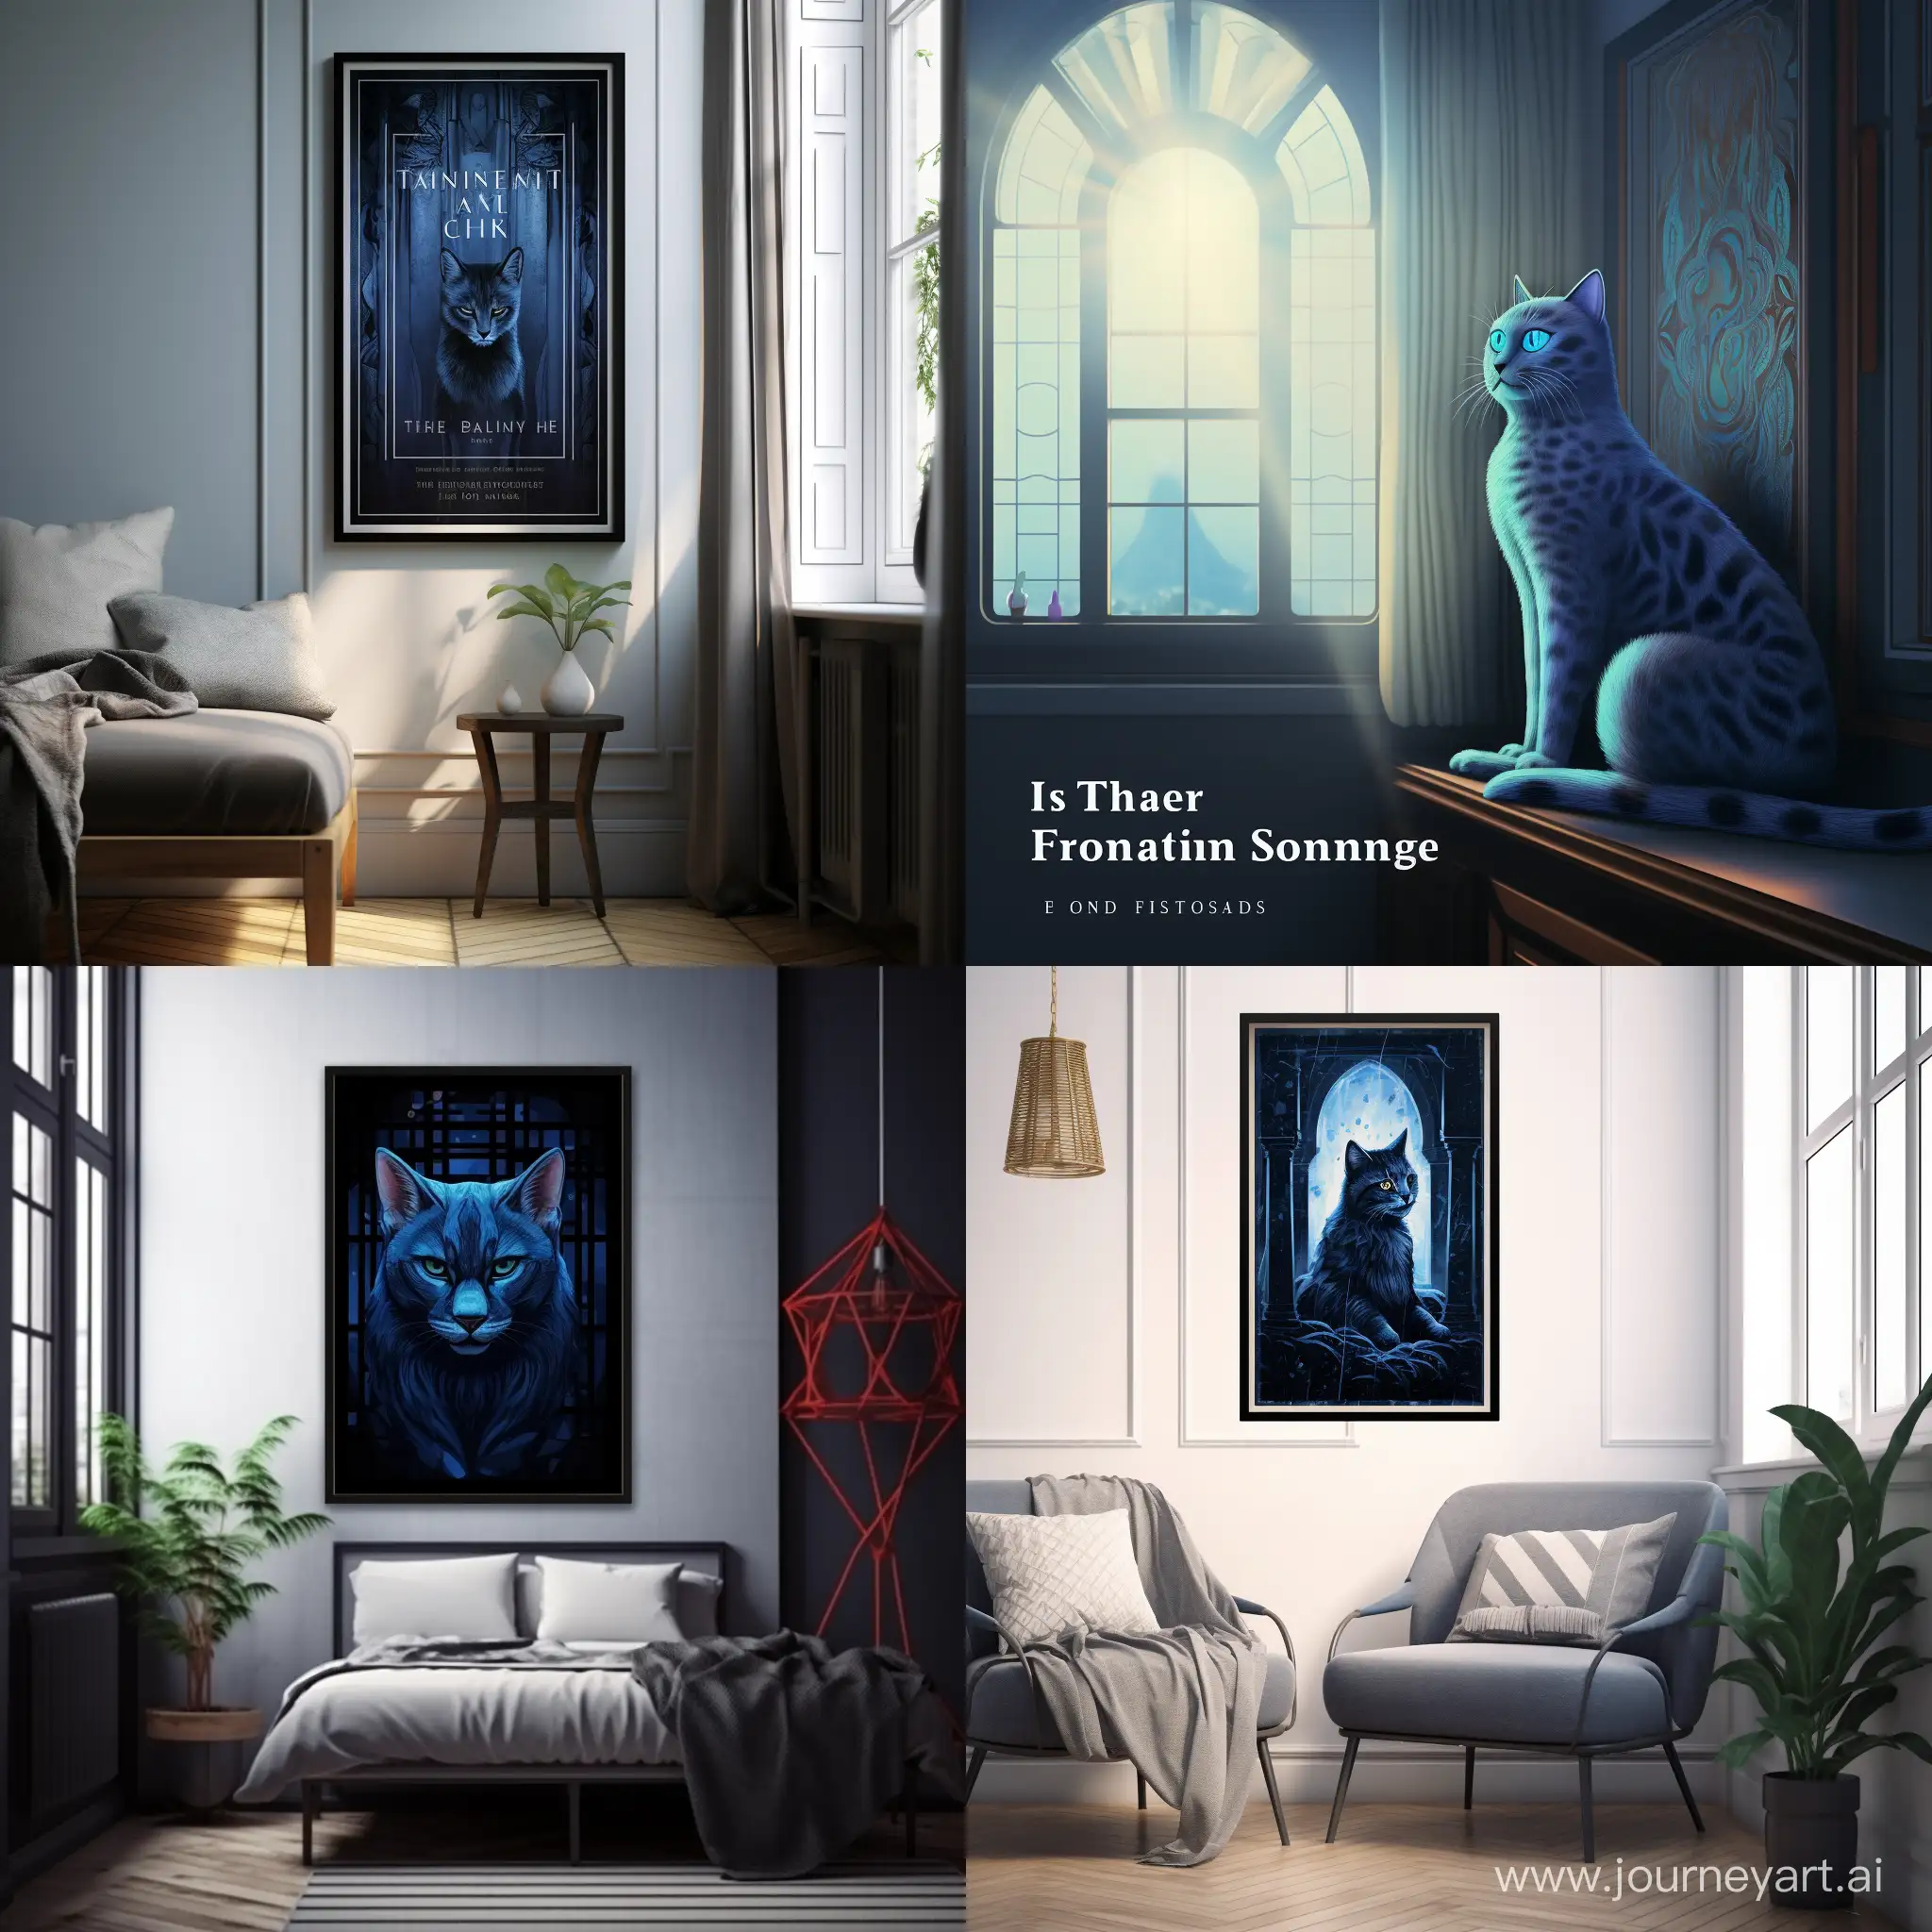 Enigmatic-Blue-Cat-Basks-in-Illuminated-Window-Fantasy-Movie-Poster